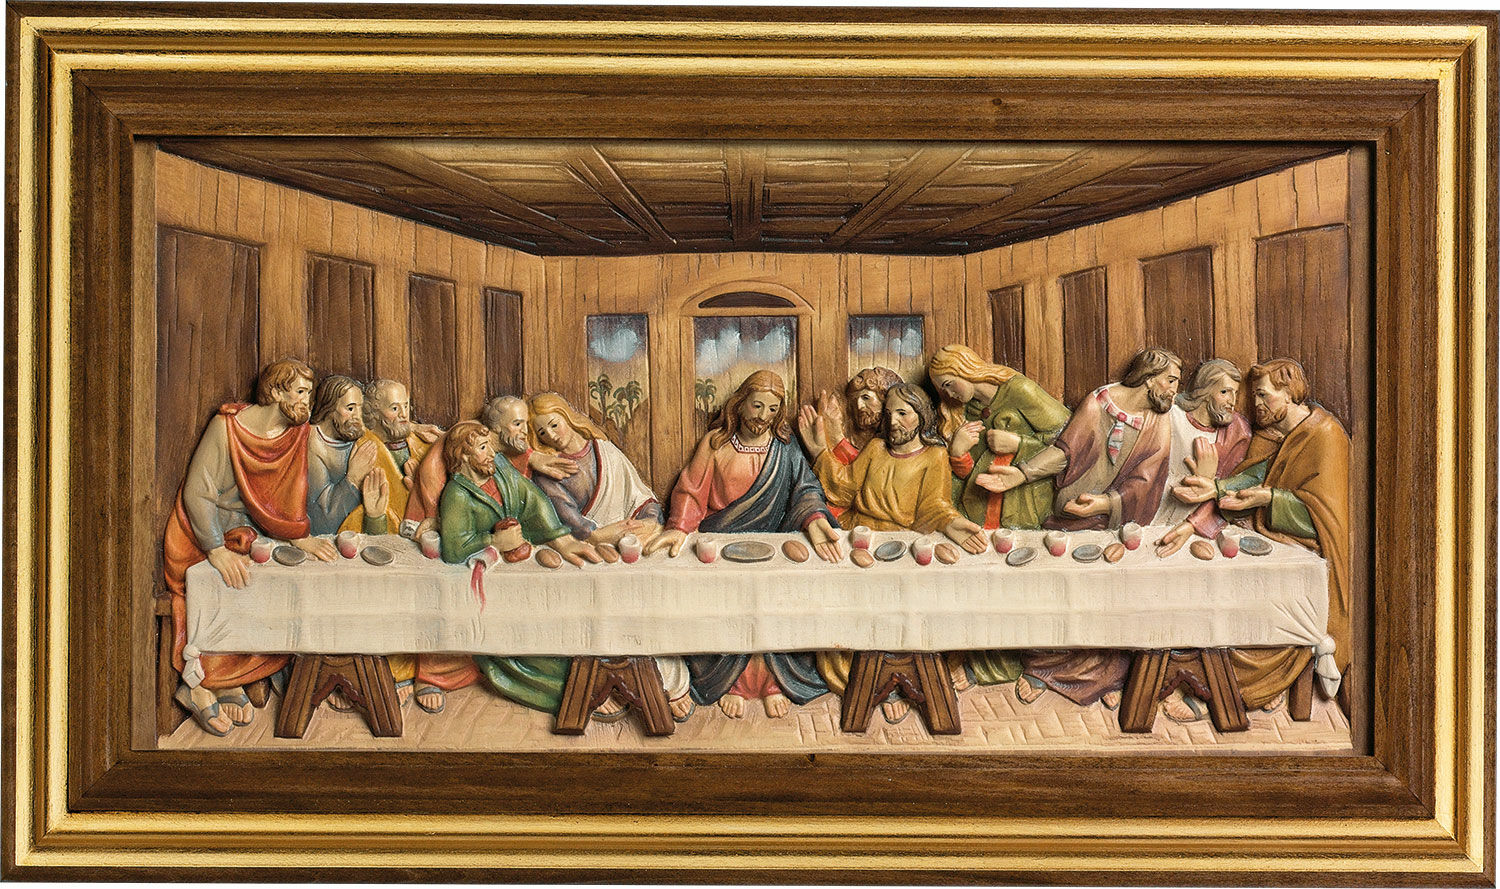 Picture "The Last Supper" (1495-1498), framed by Leonardo da Vinci